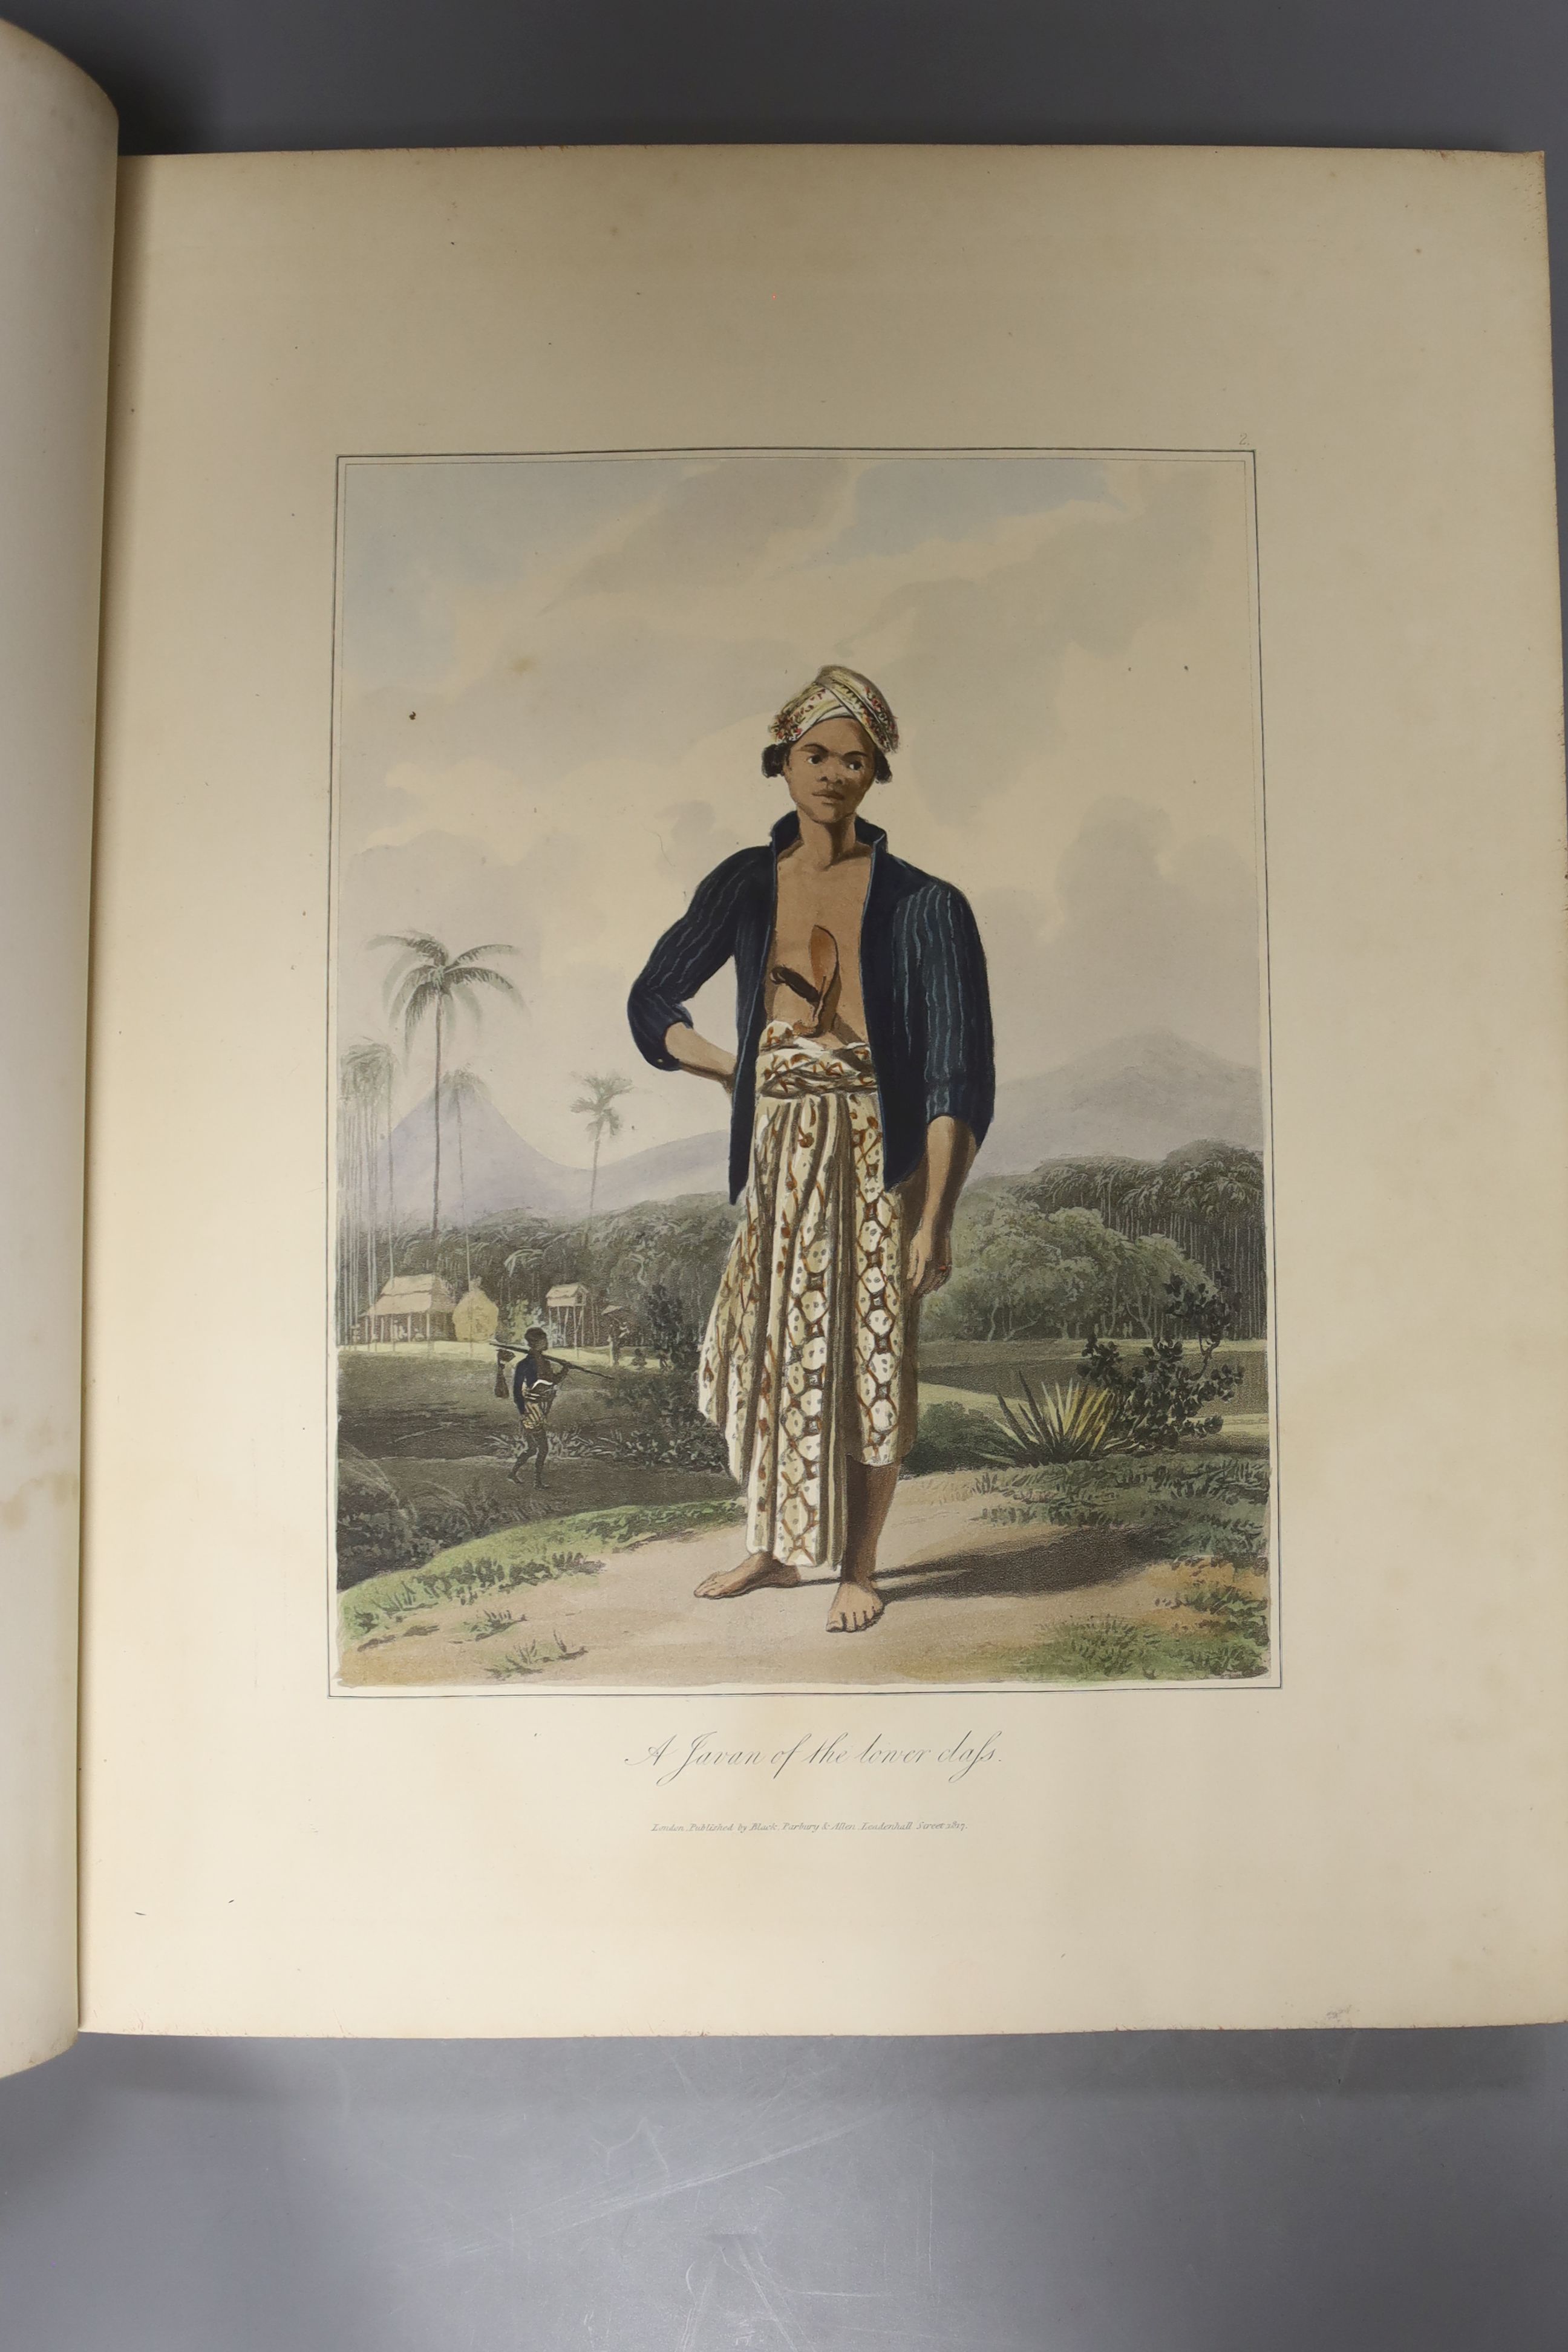 Raffles, Thomas, Stamford, Sir - Plates to Raffles History of Java, plates badly water stained, Henry G. Bohn, London, 1844